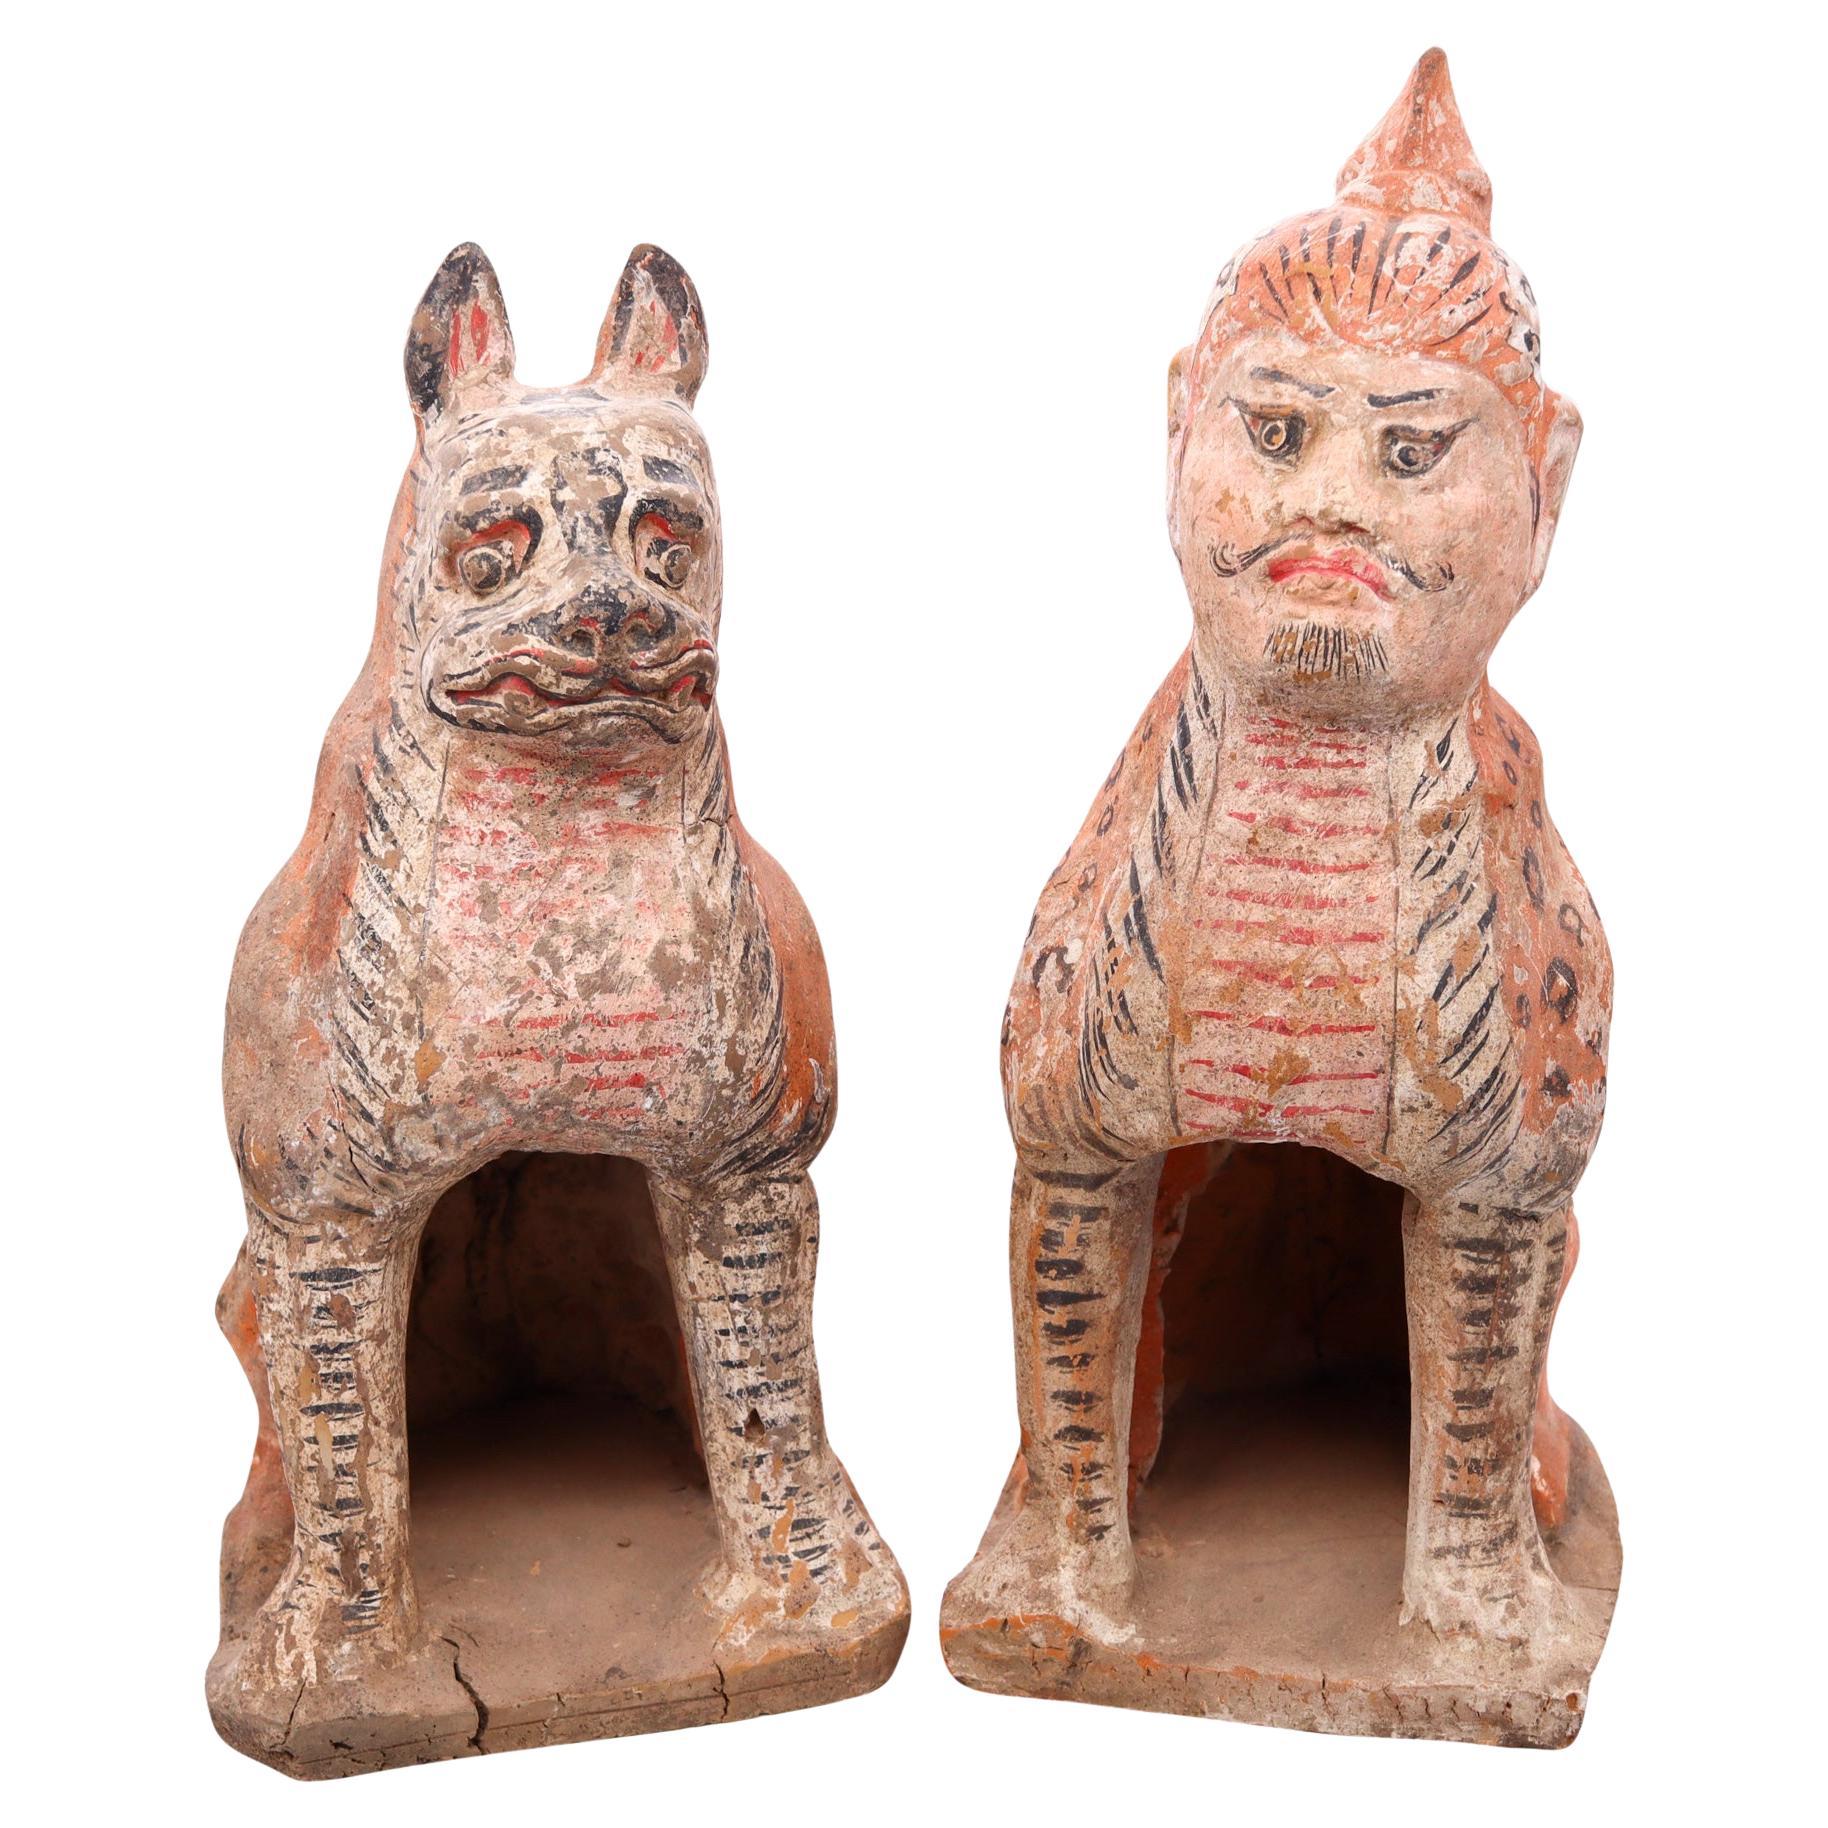 China 618-907 AD Tang-Dynastie, Paar polychrome Erdge Geister, Zhenmushou 